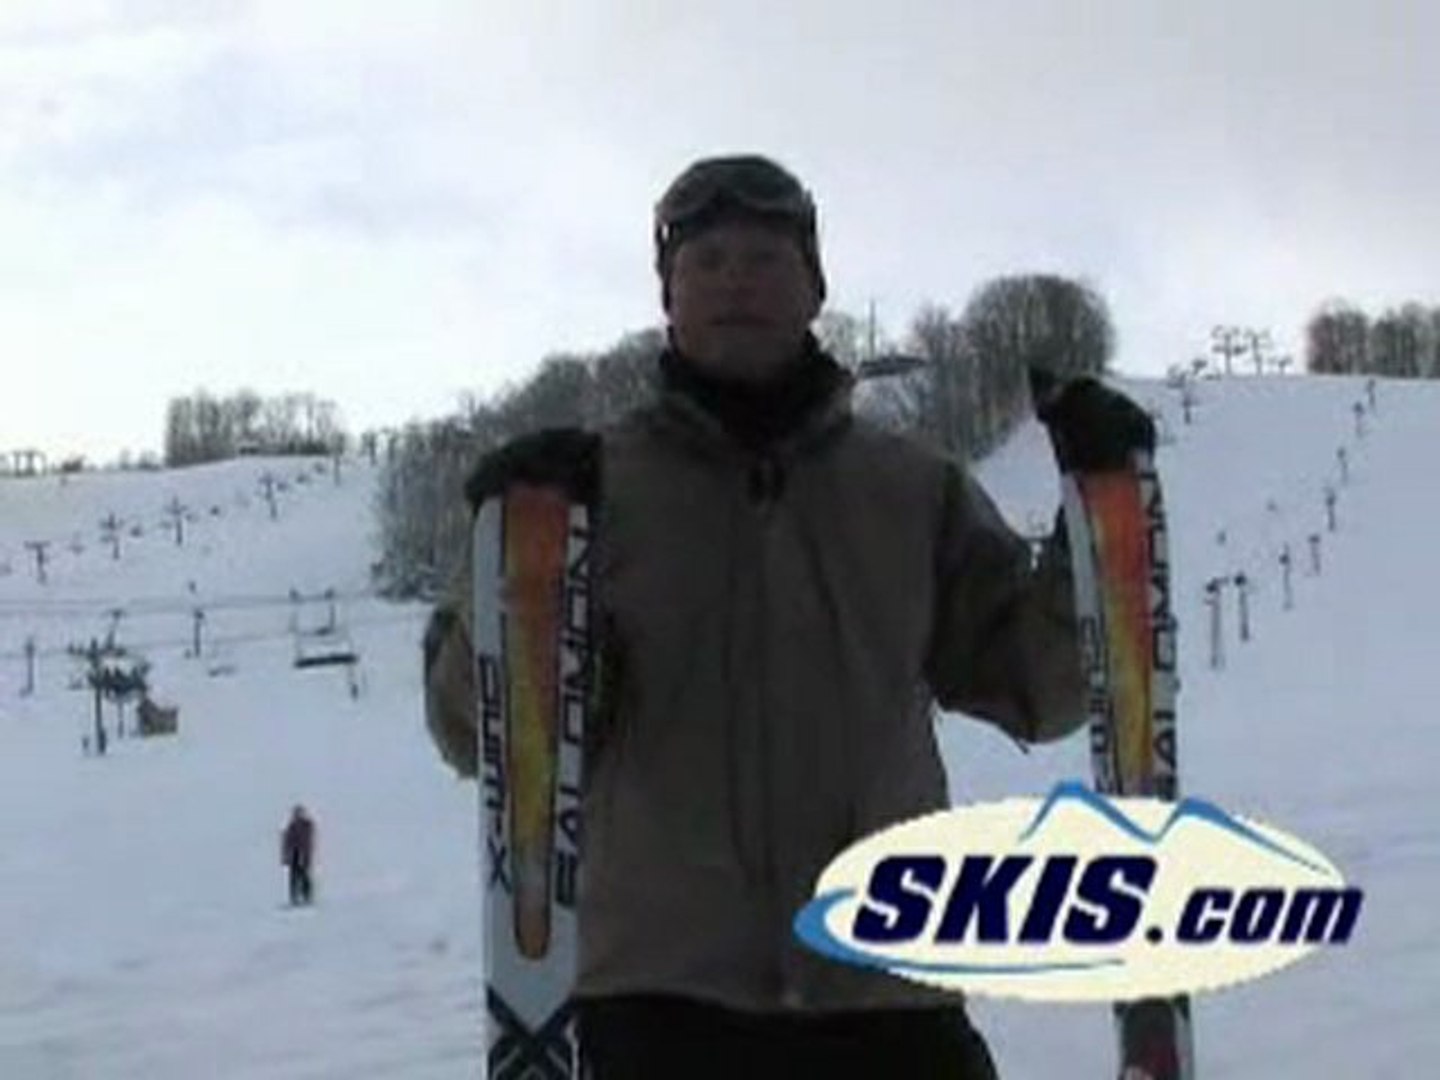 Salomon X Wing 8 Ski Review - video Dailymotion